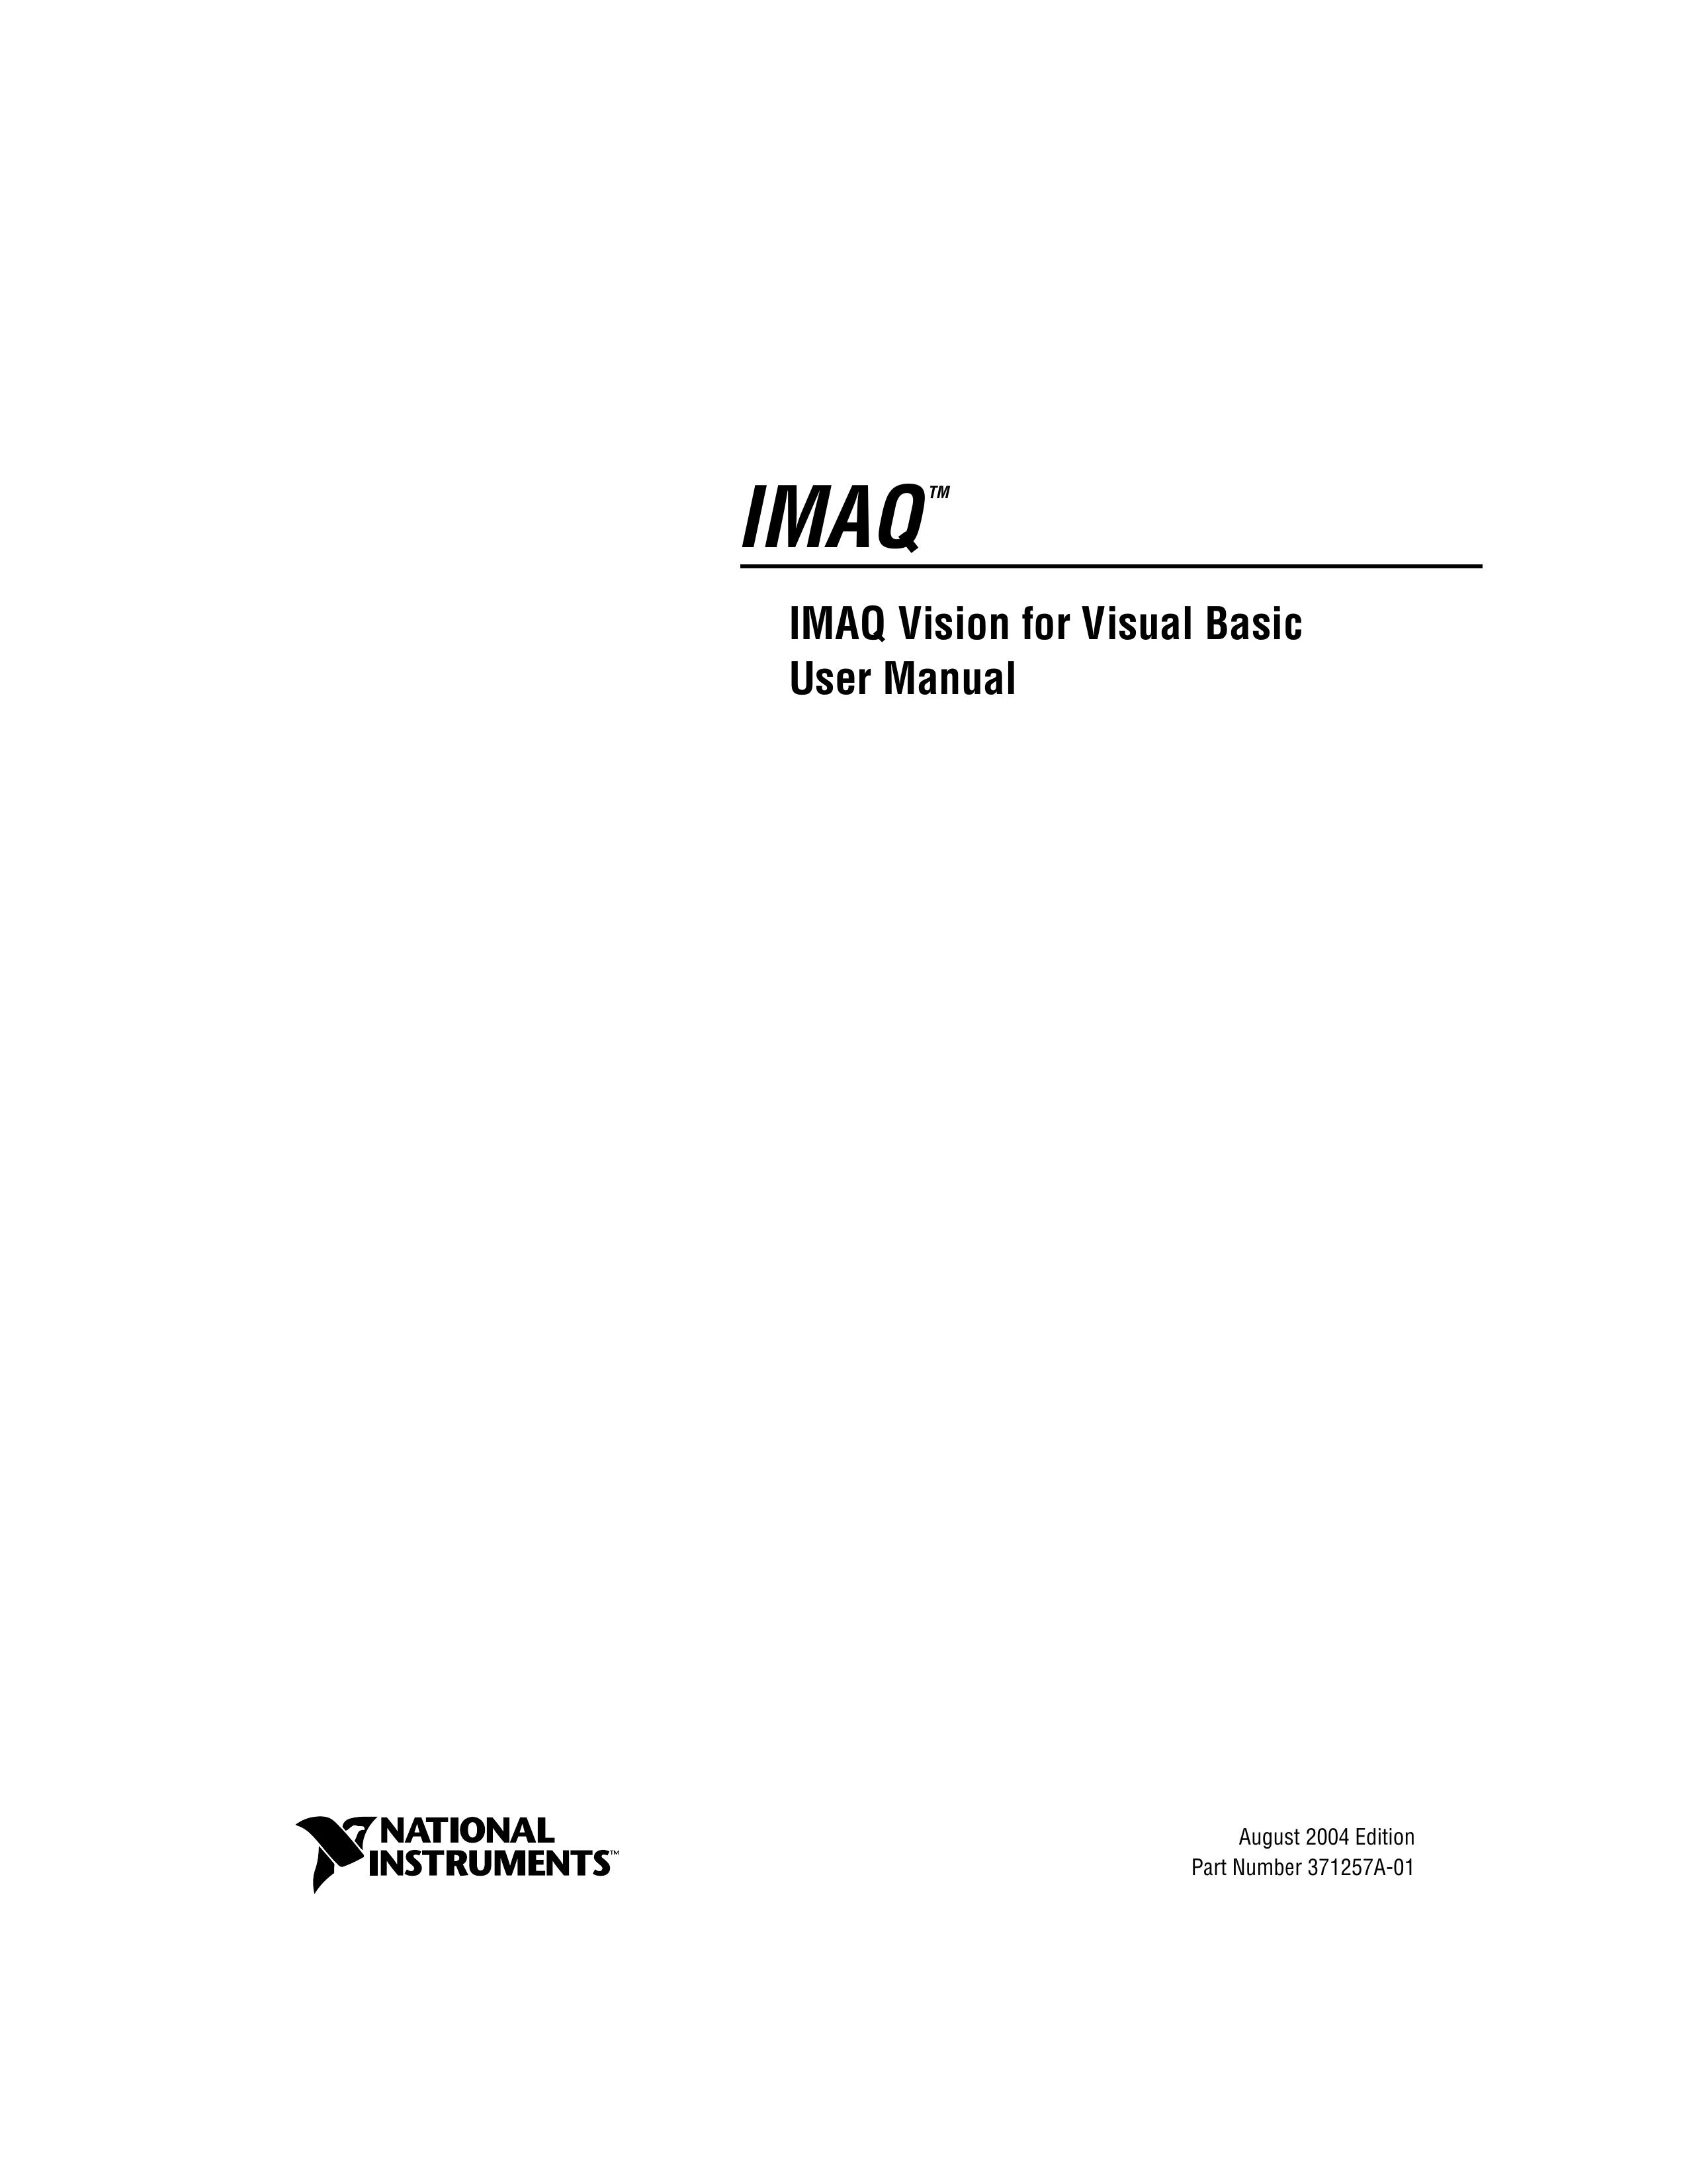 National Instruments IMAQTM Digital Camera User Manual